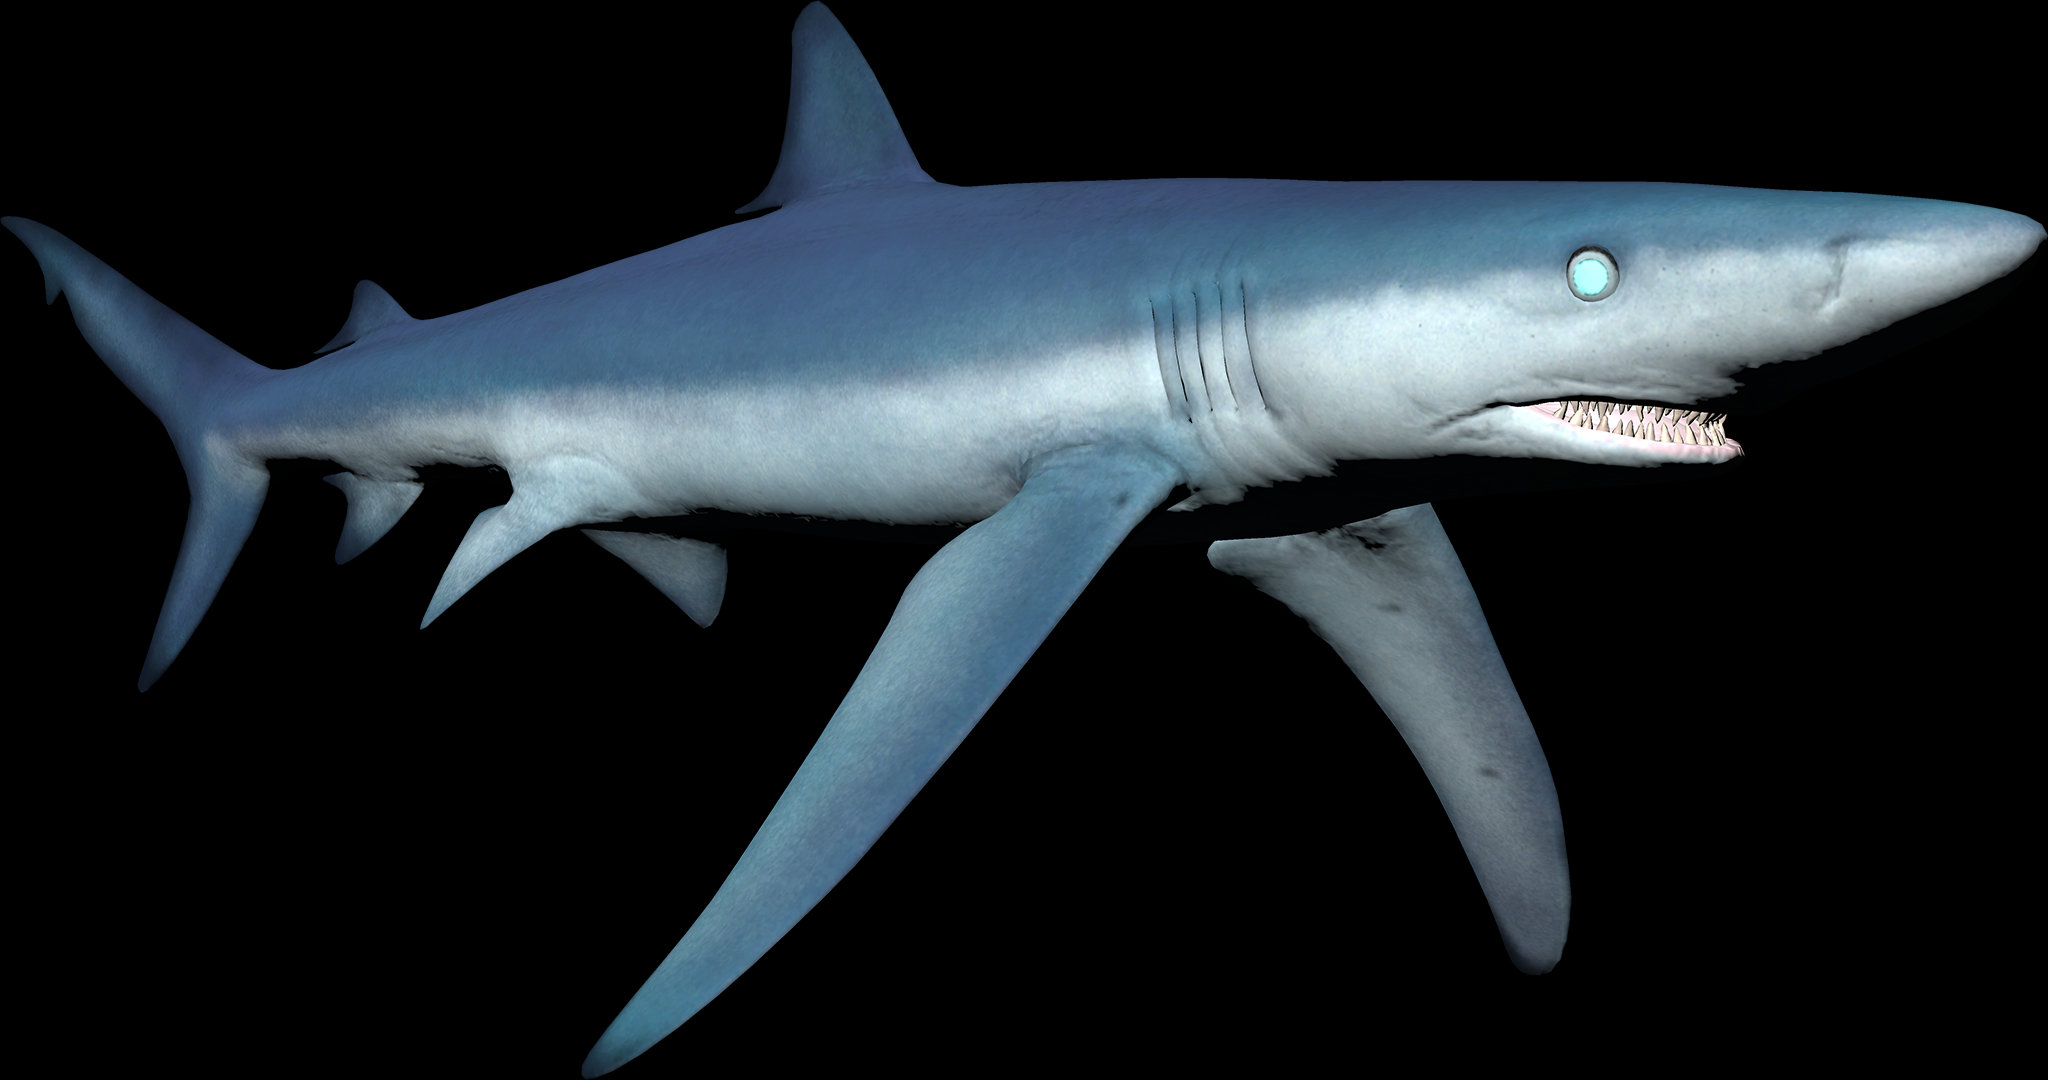 if u like shark games you should definitely get depth. It's